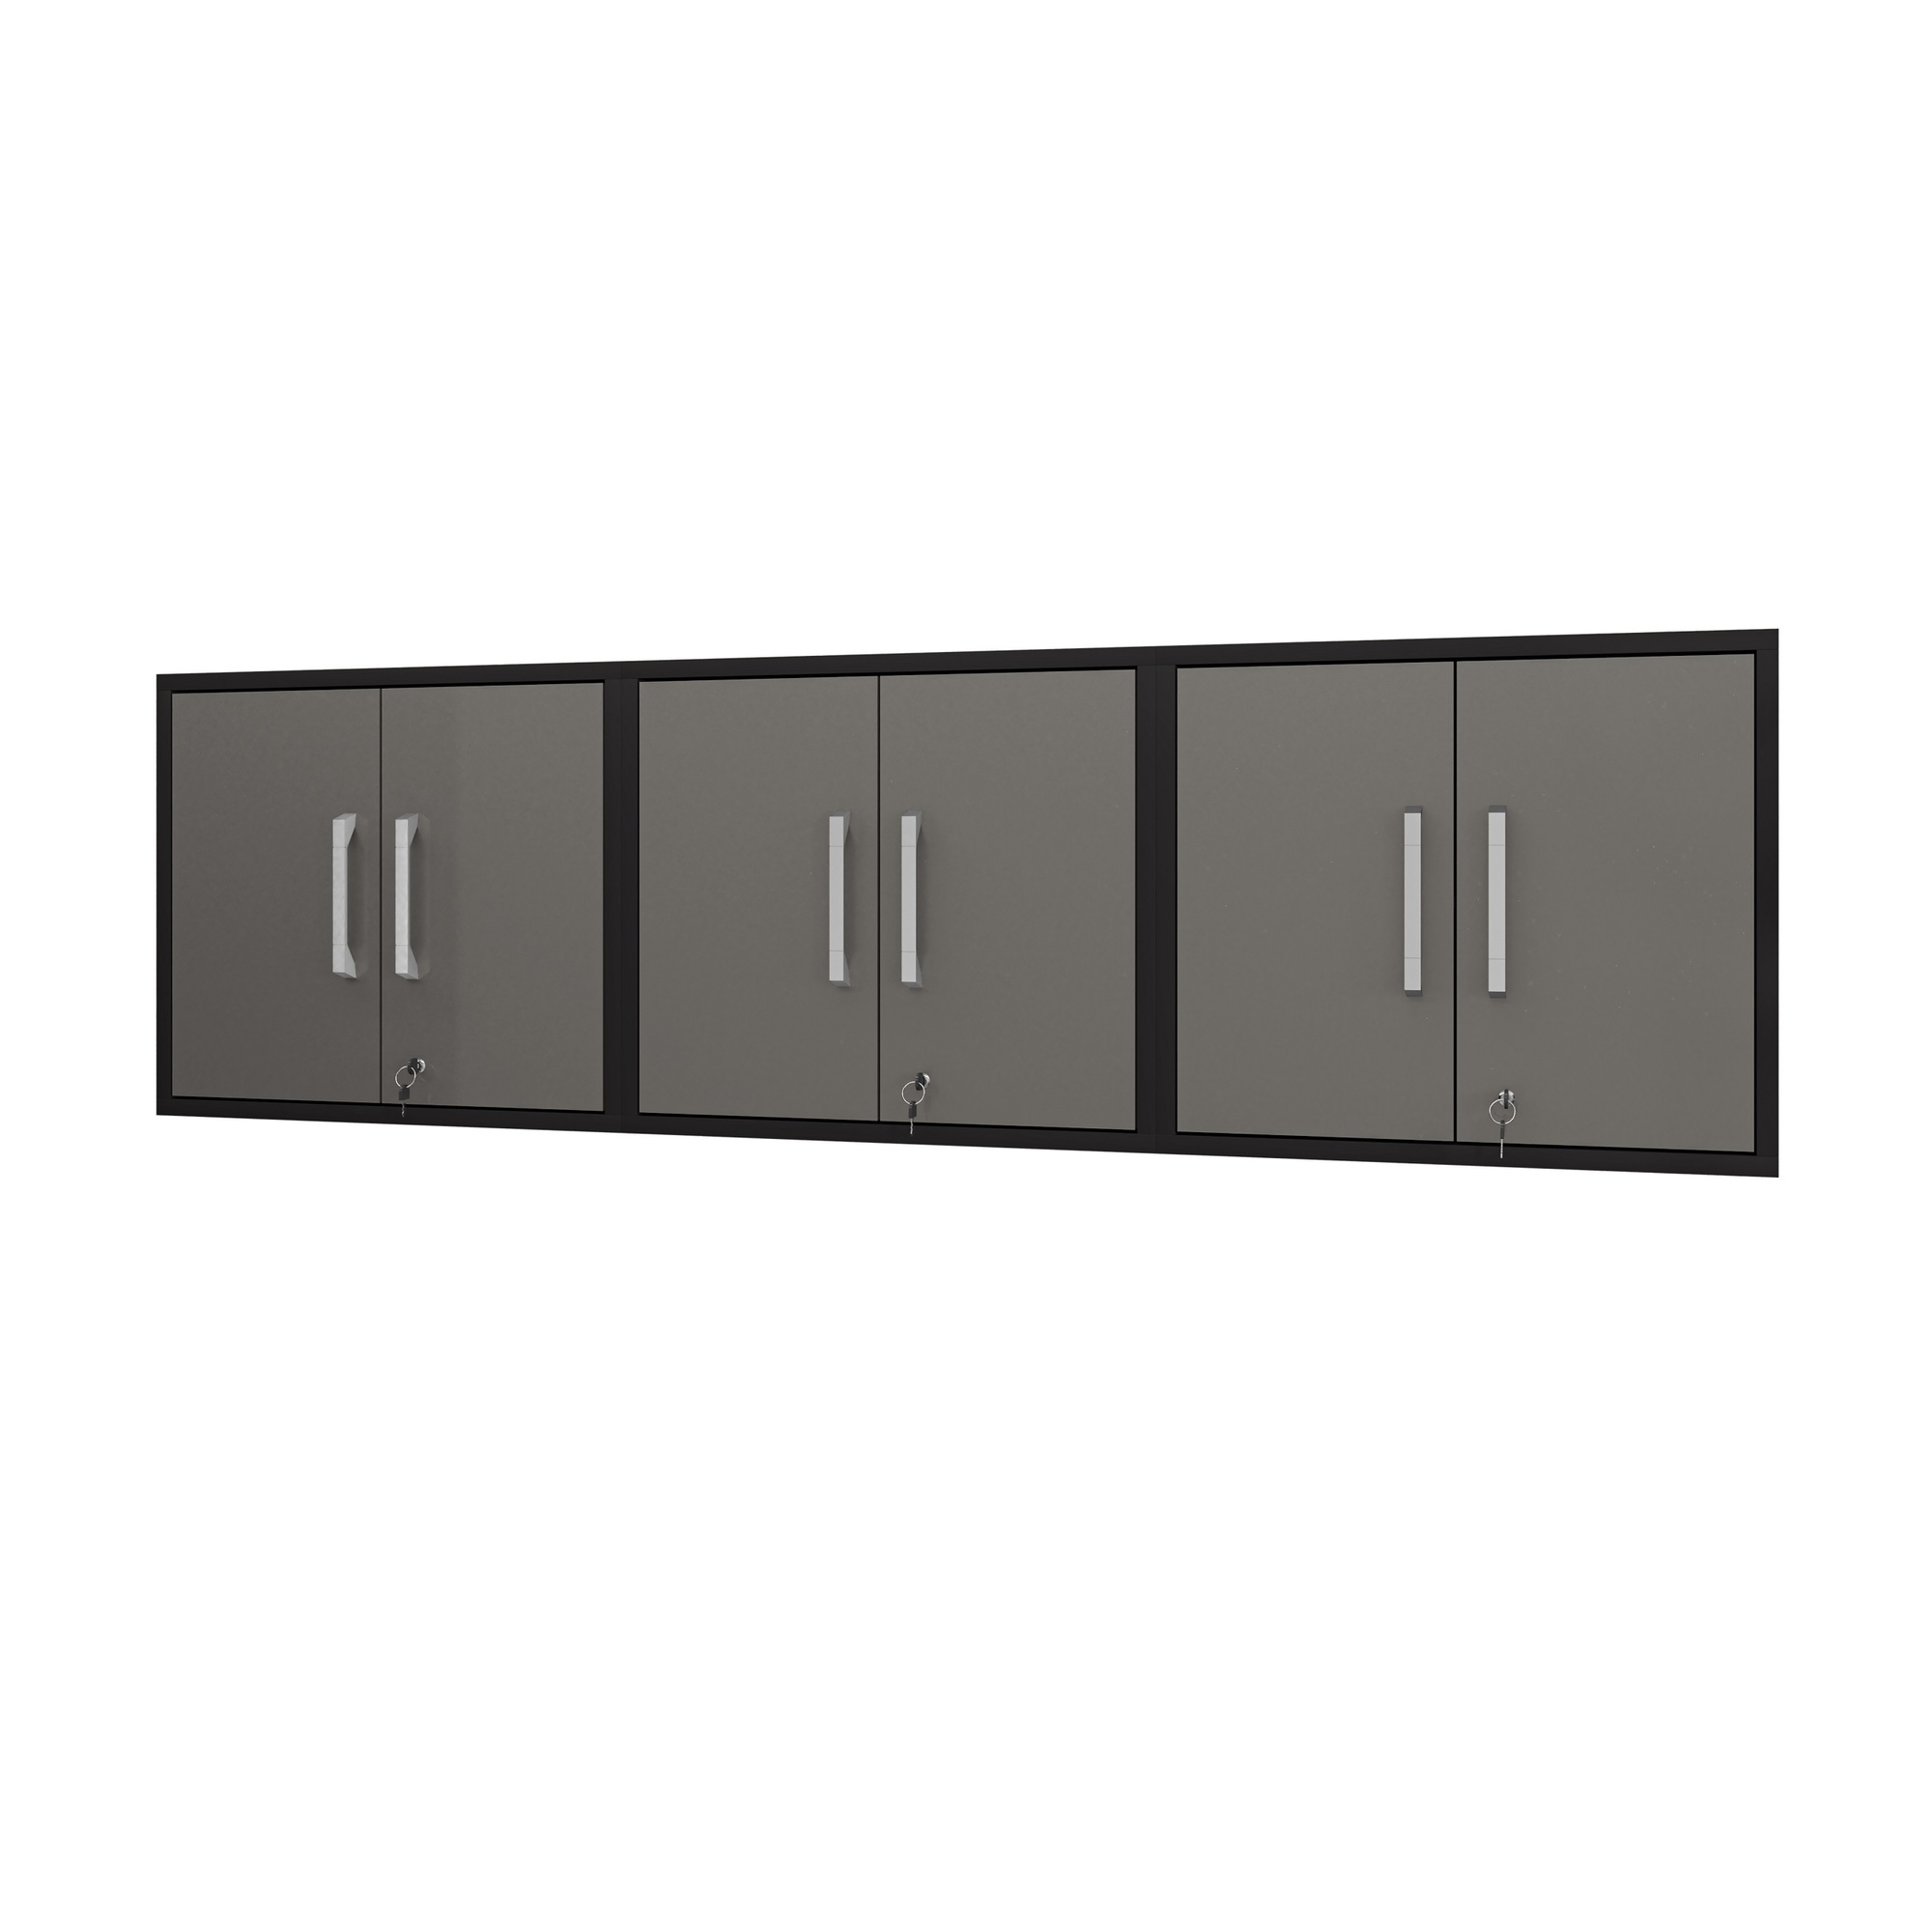 Manhattan Comfort, Eiffel Floating Garage Cabinet Black Grey Set 3 Height 25.59 in, Width 85.05 in, Color Gray, Model 3-251BMC